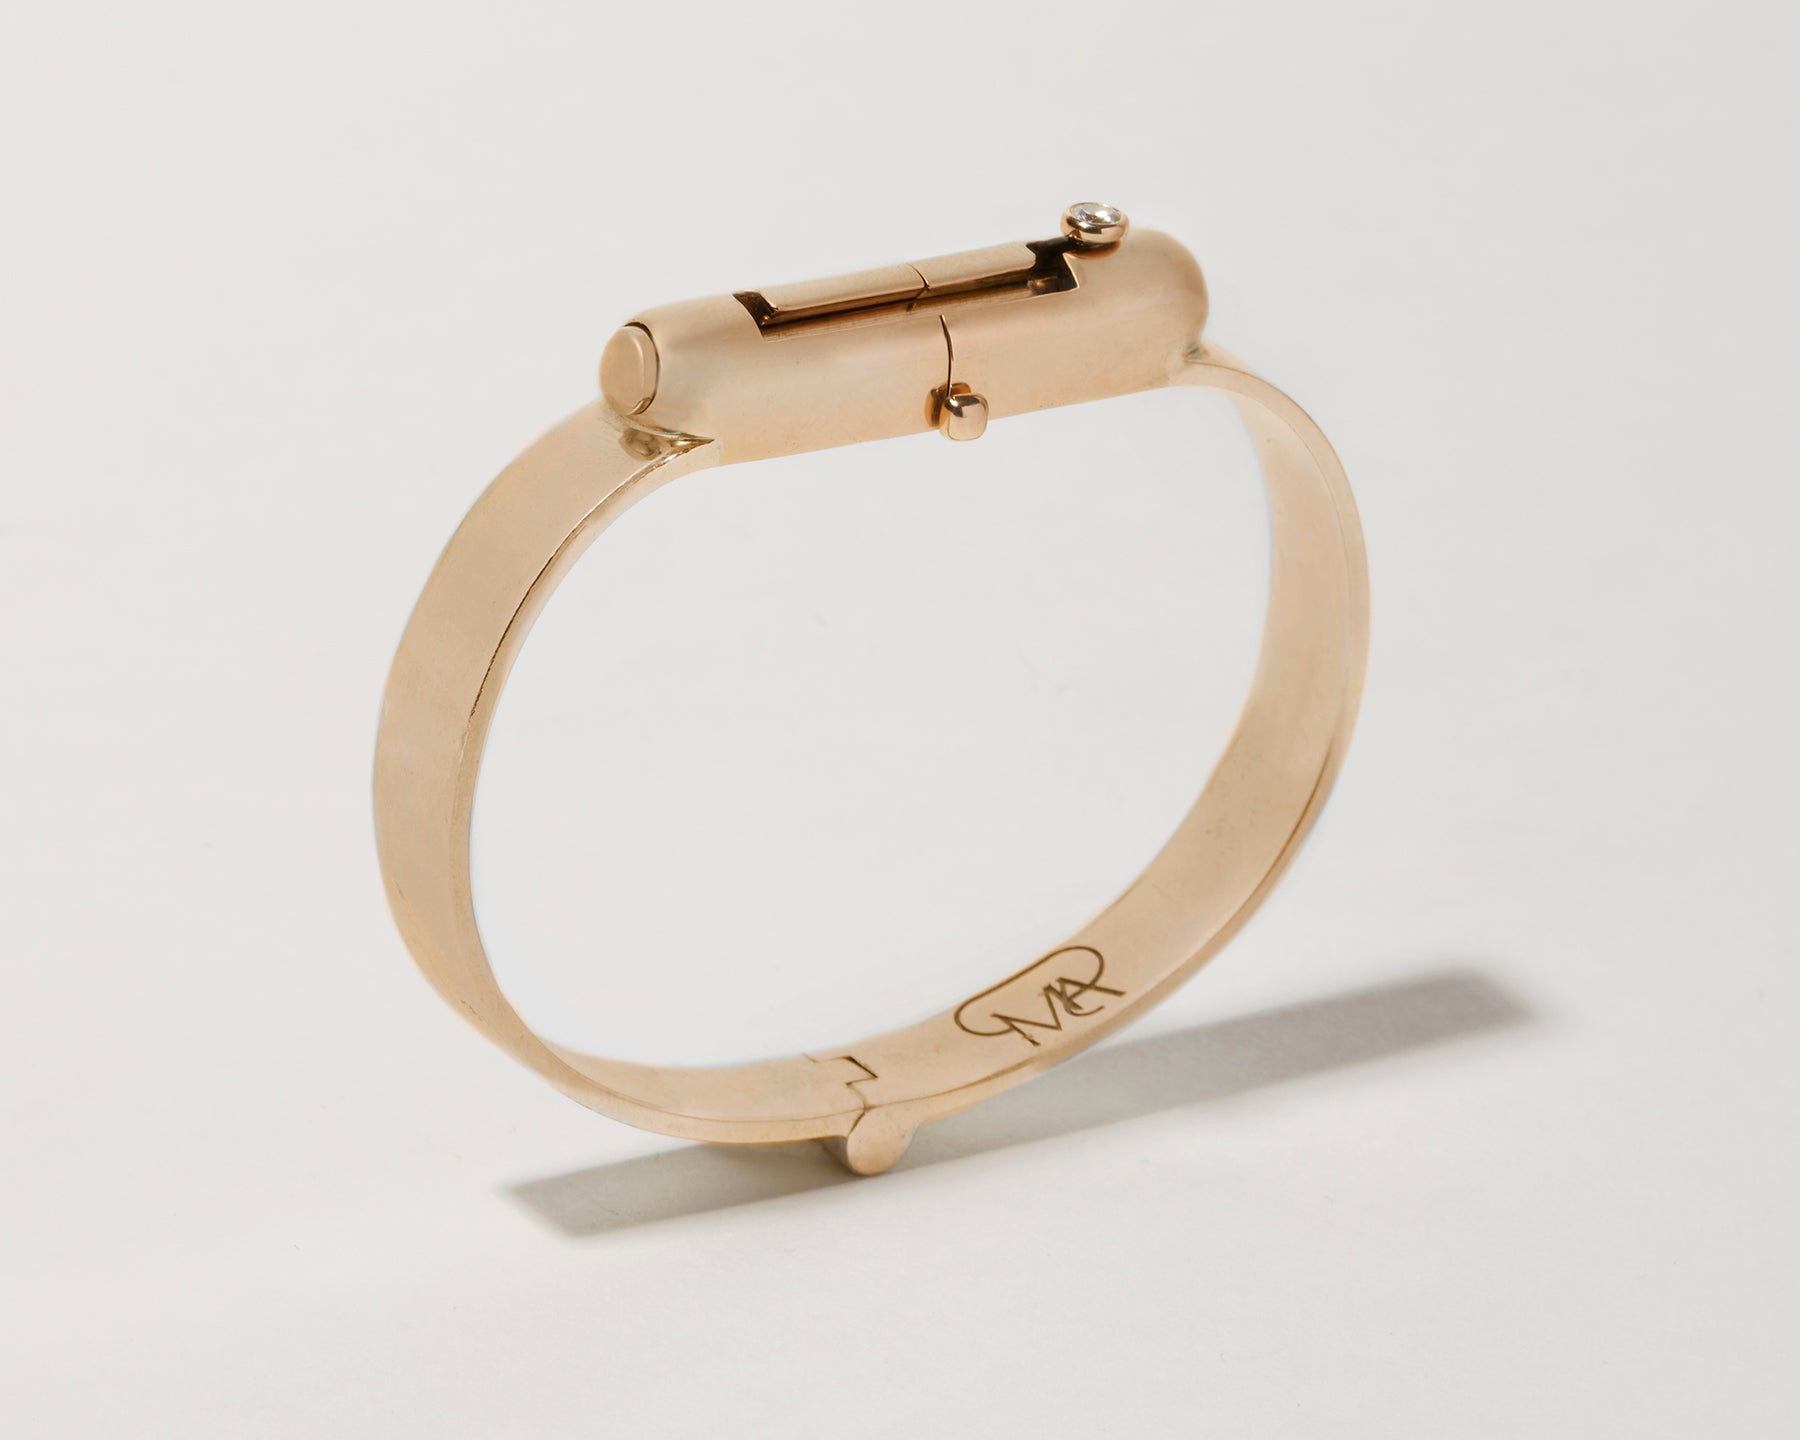 Angled front shot of gold clasp bracelet against white backdrop